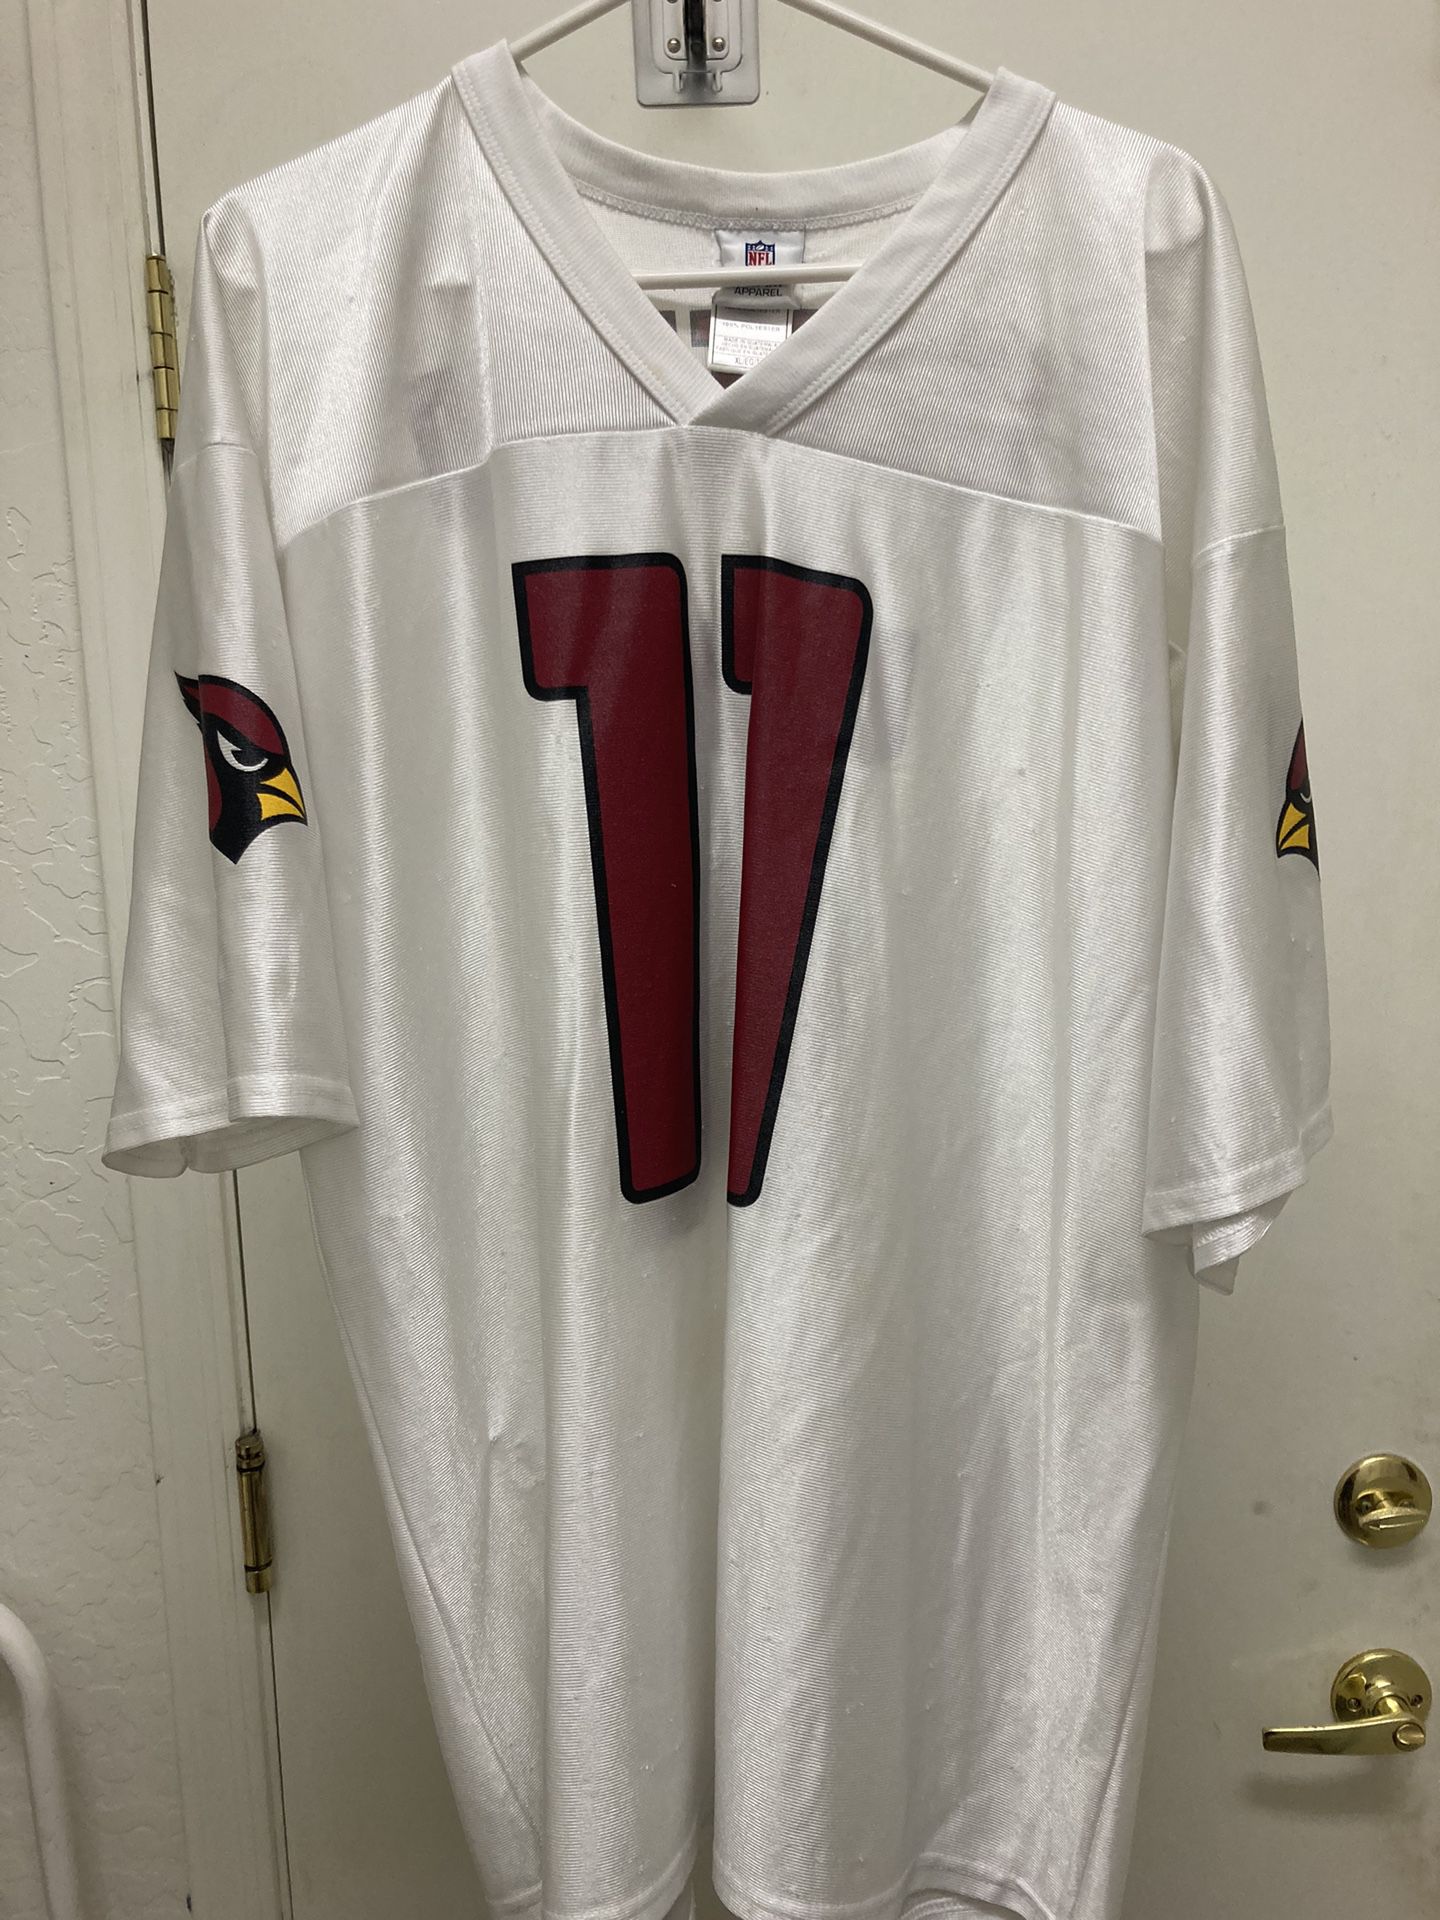 larry fitzgerald arizona cardinals jersey